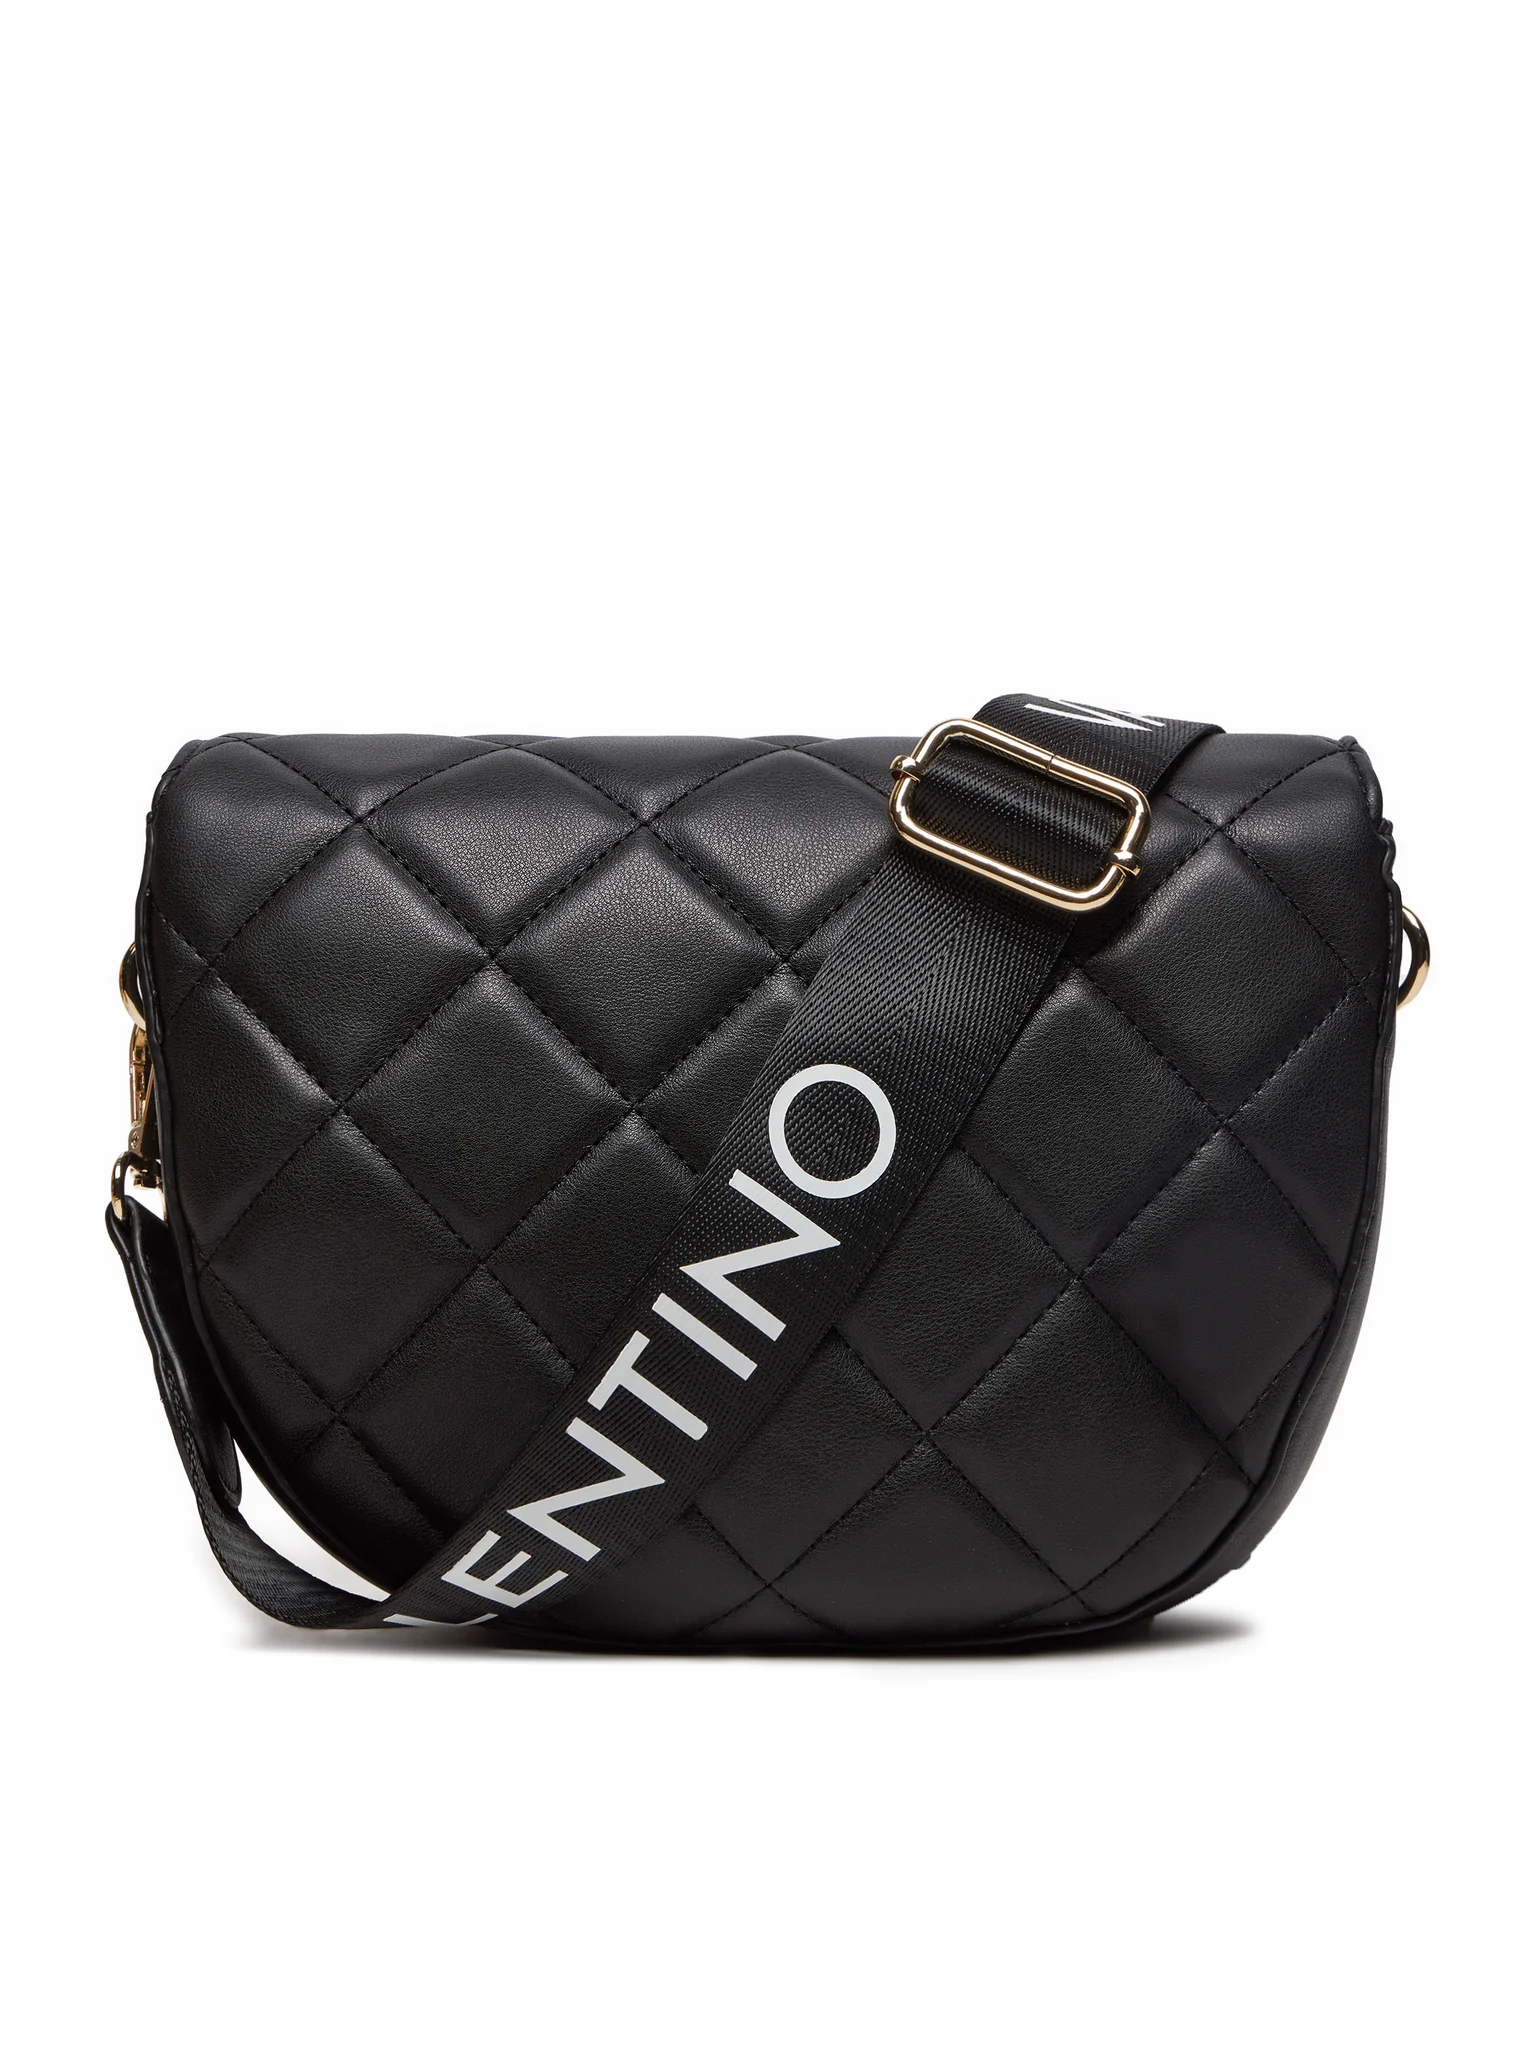 Valentino Flap Bag Bigs